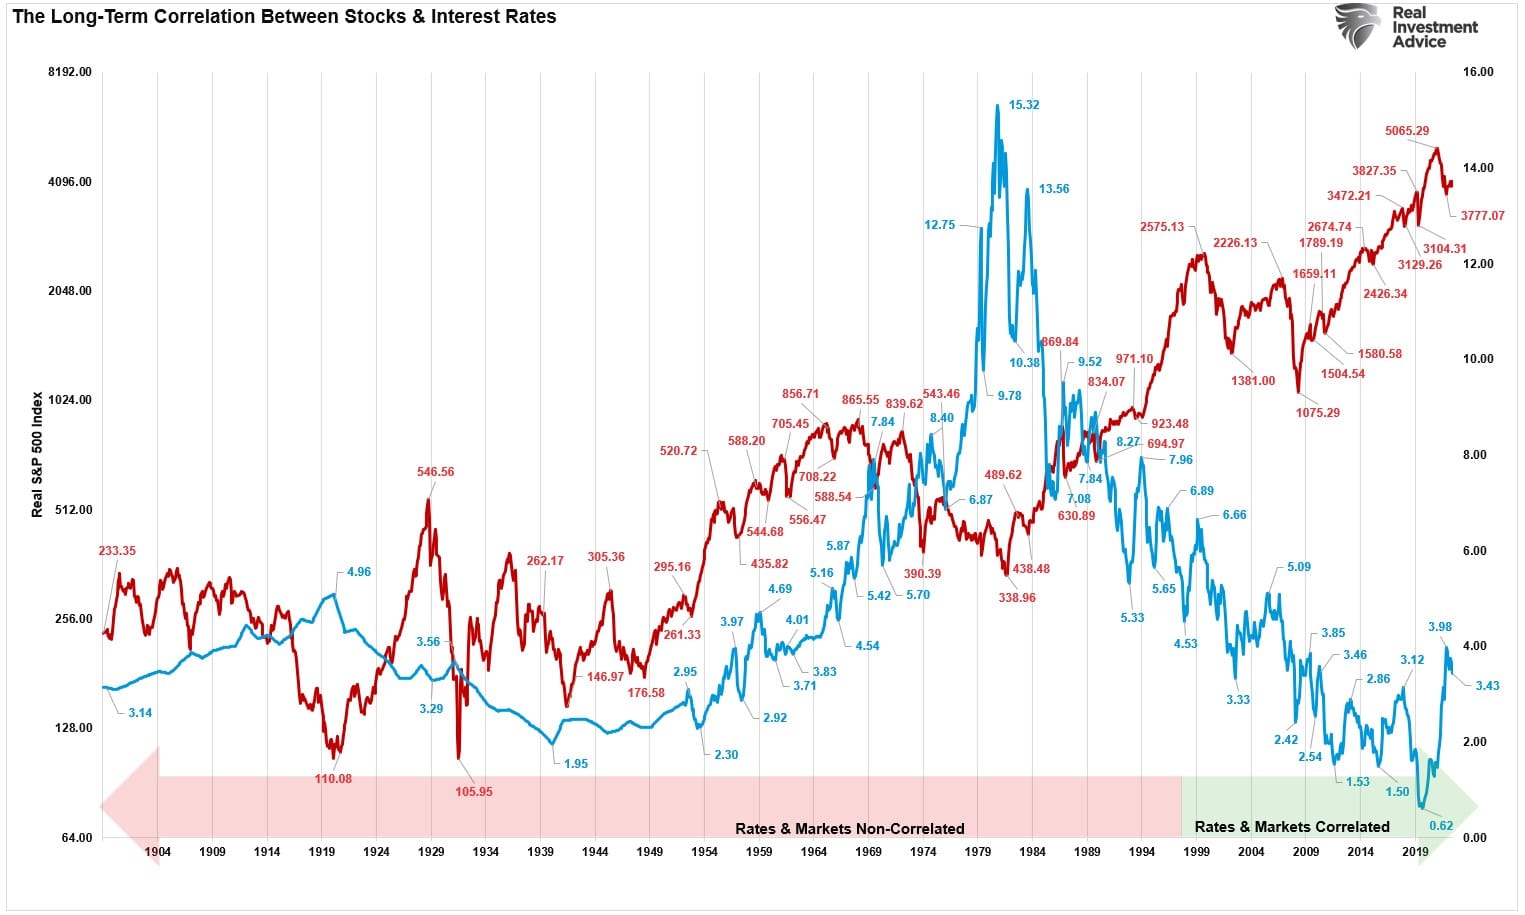 Stocks vs Interrest Rates Long-Term